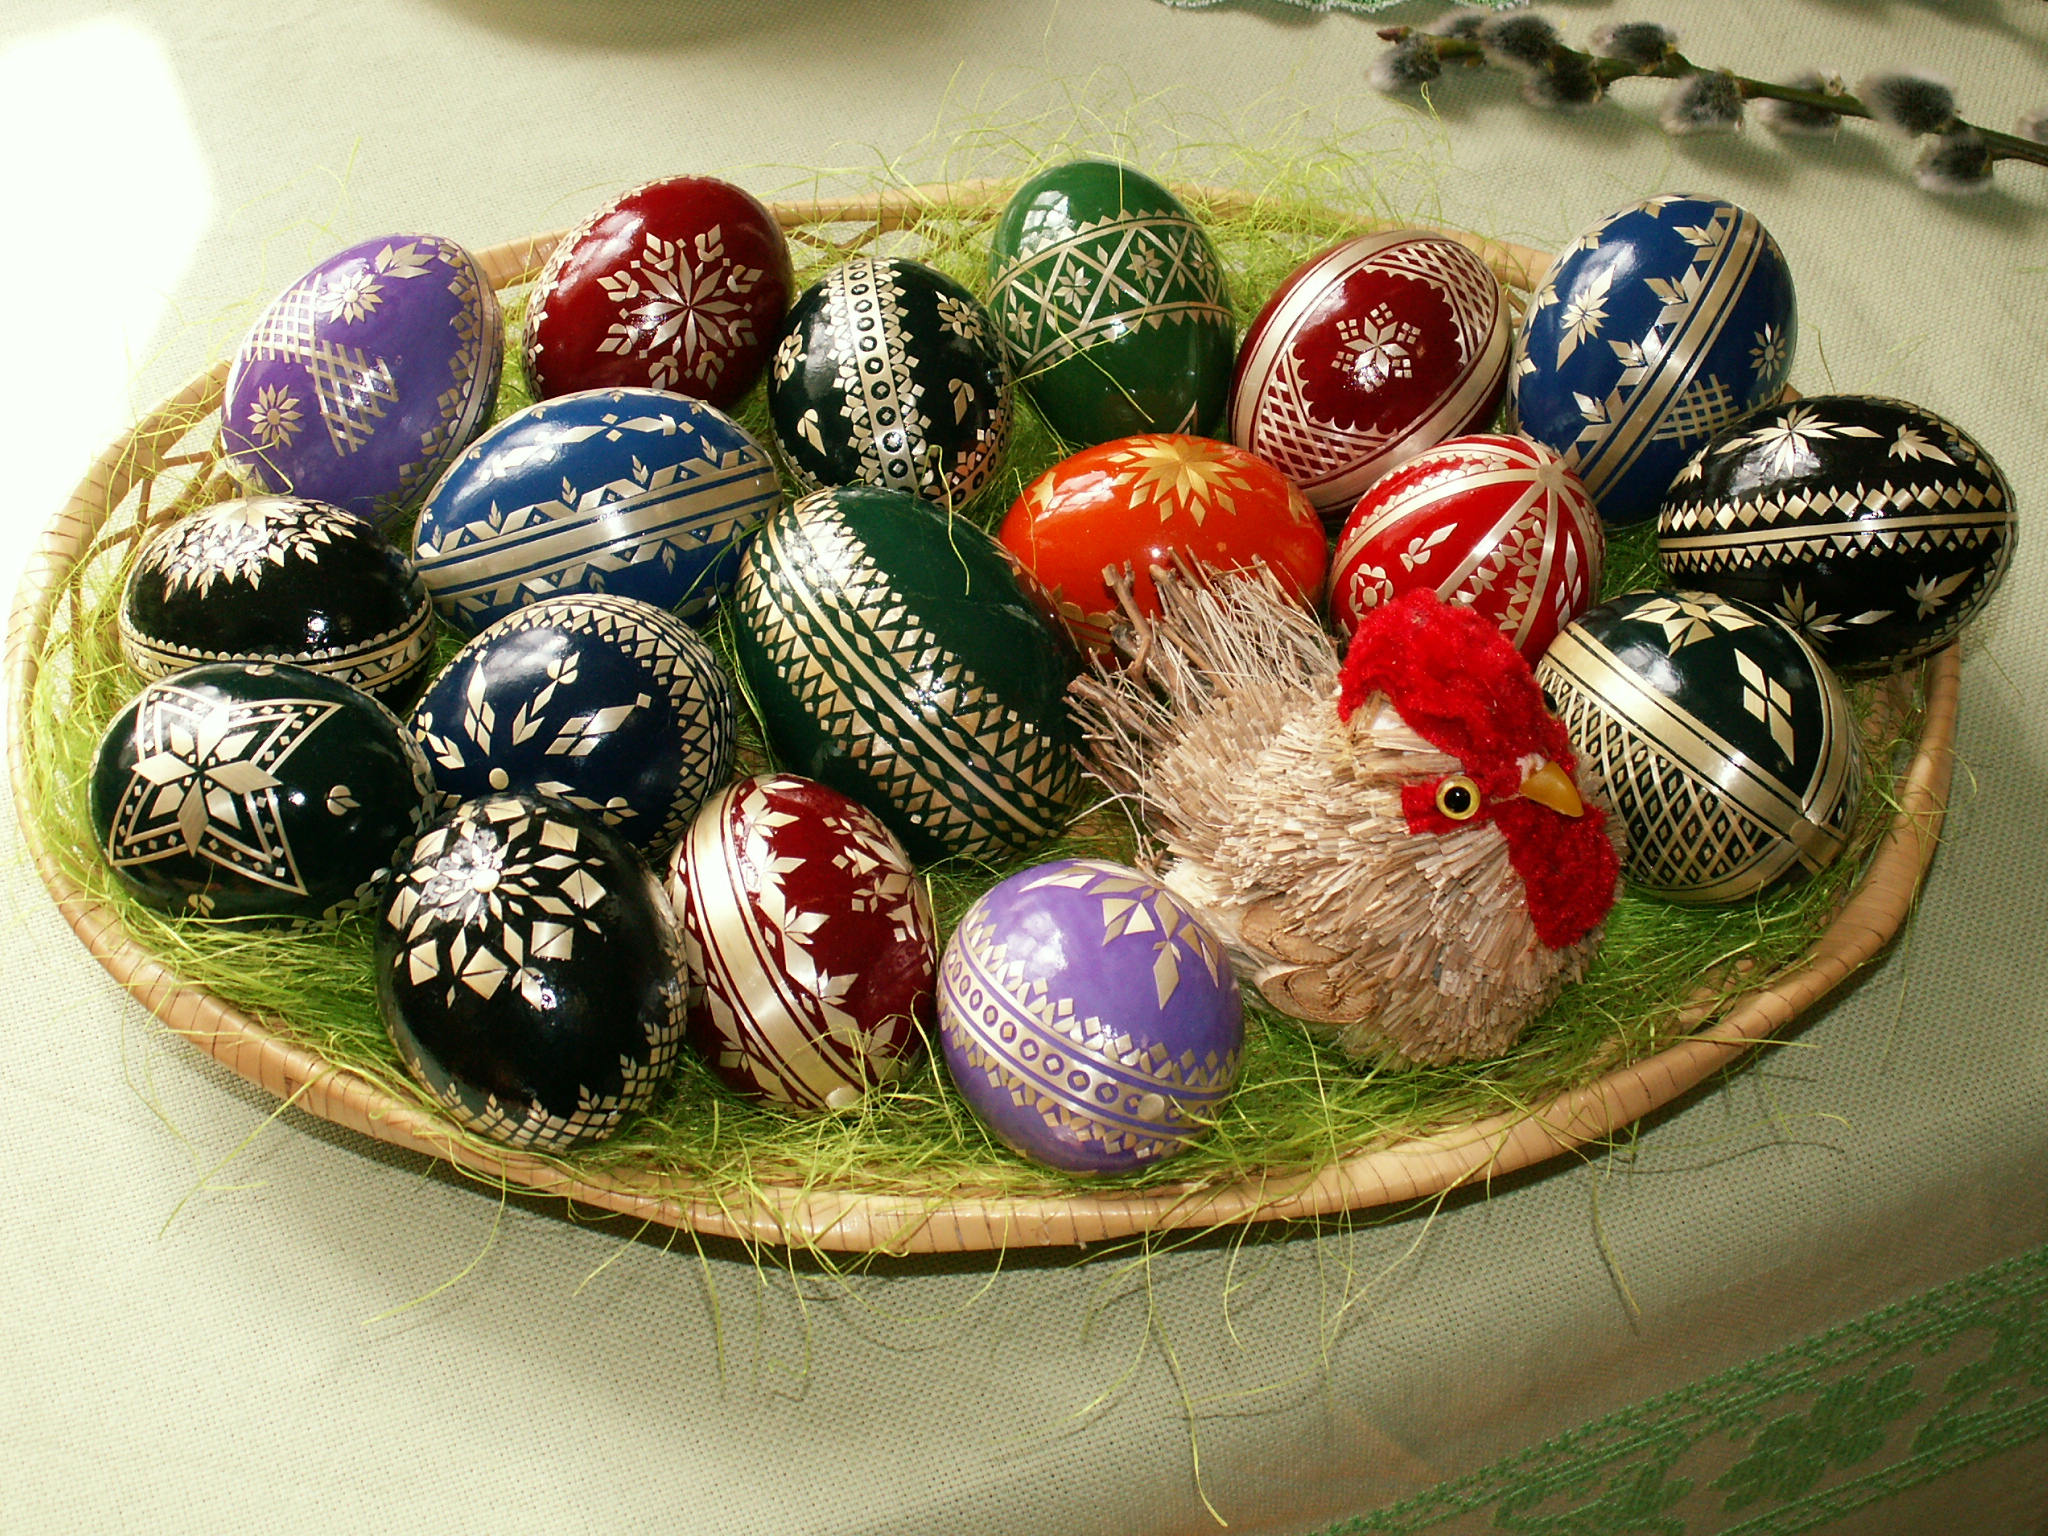 File:Easter eggs - straw decoration.jpg - Wikipedia